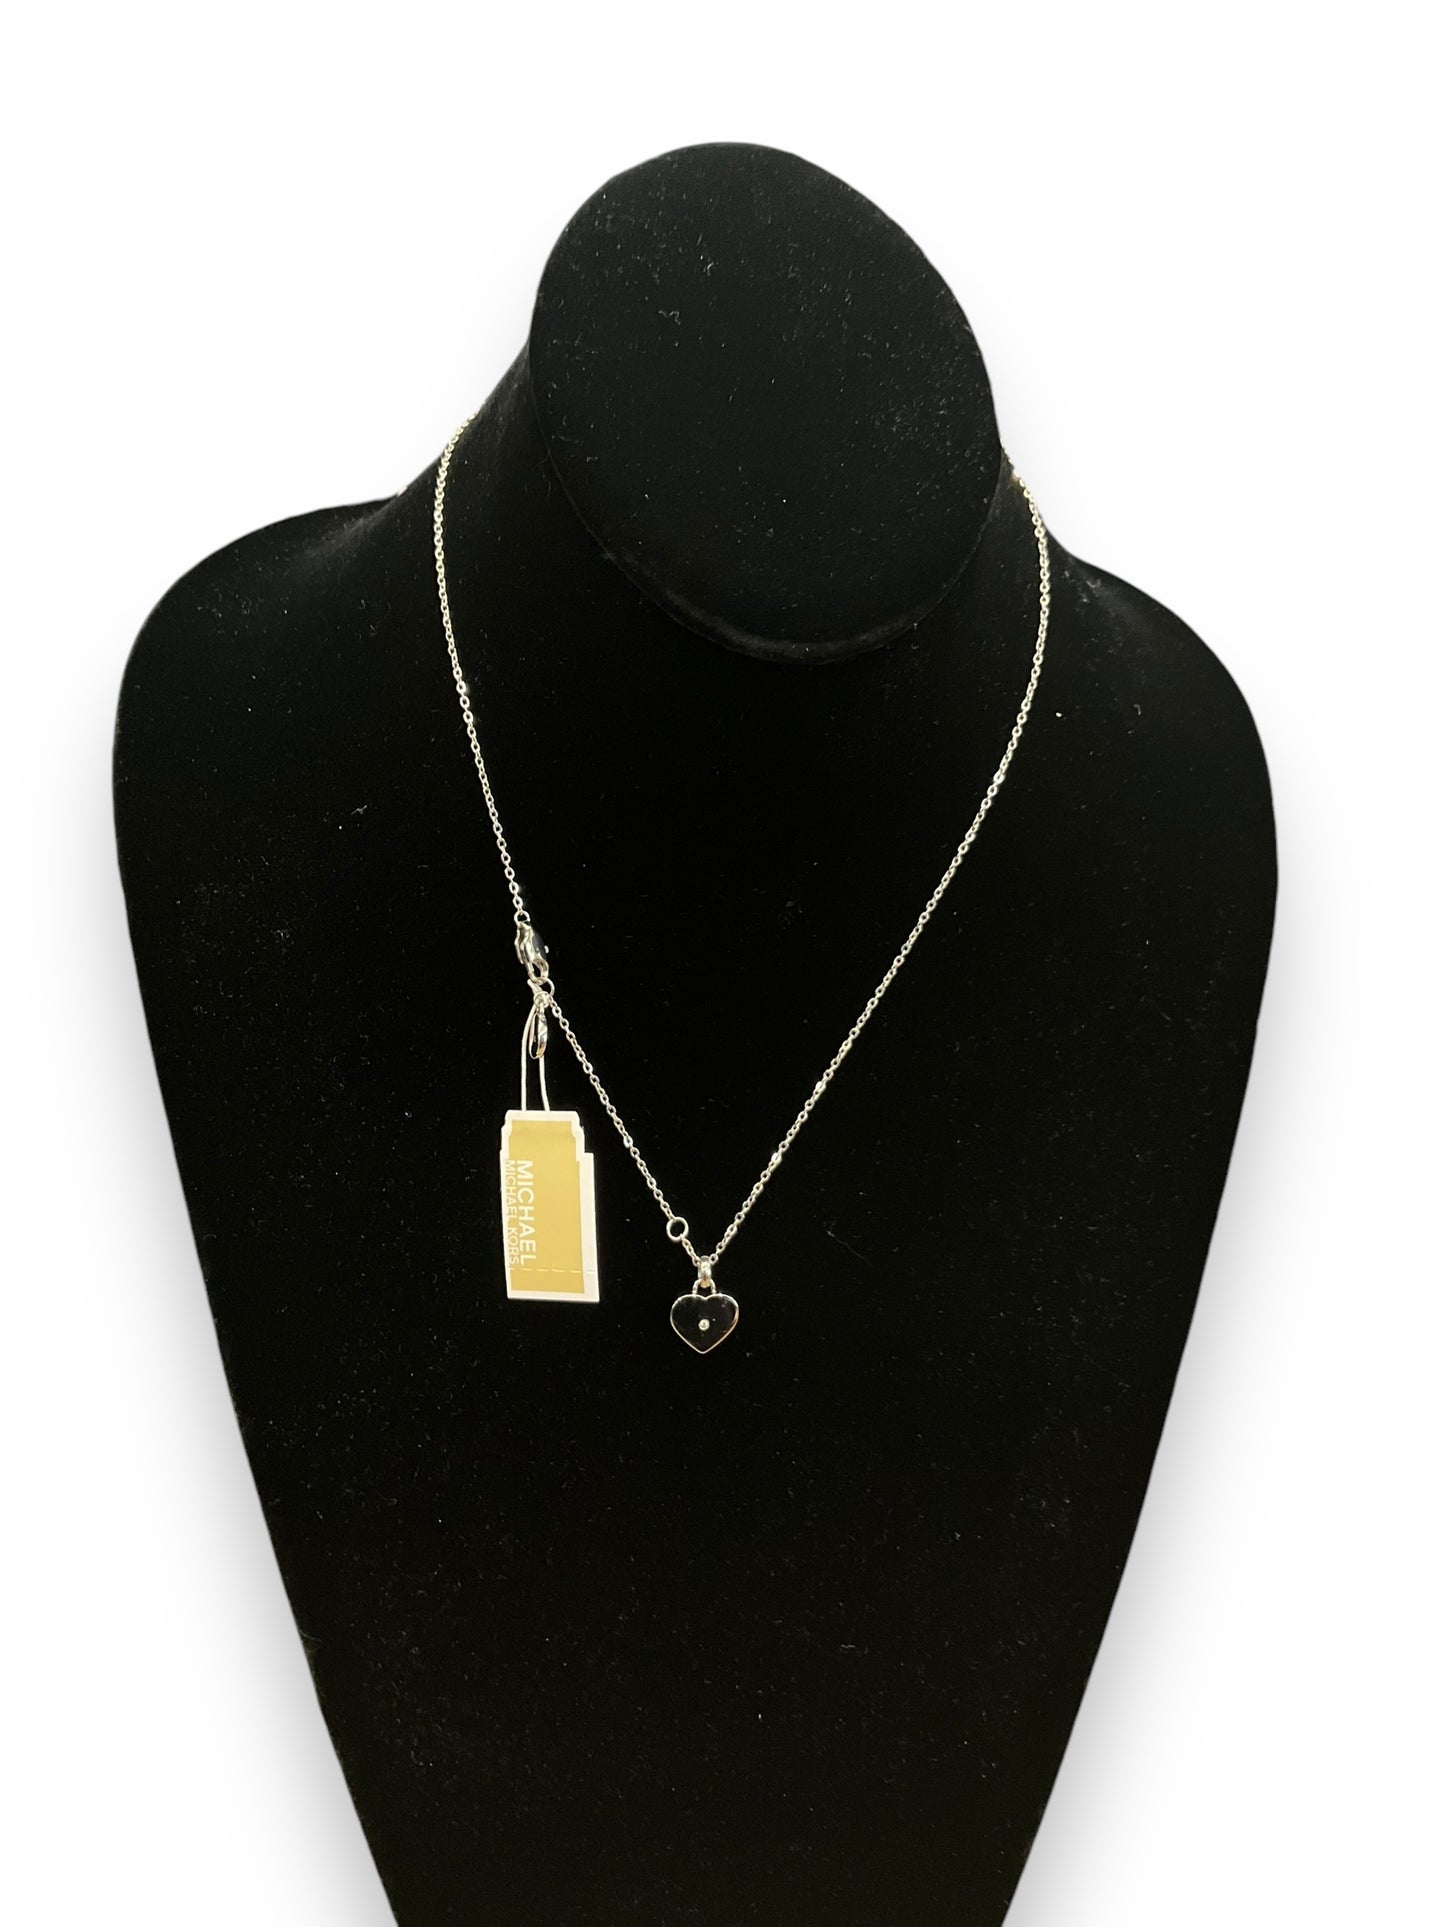 Necklace Pendant By Michael Kors